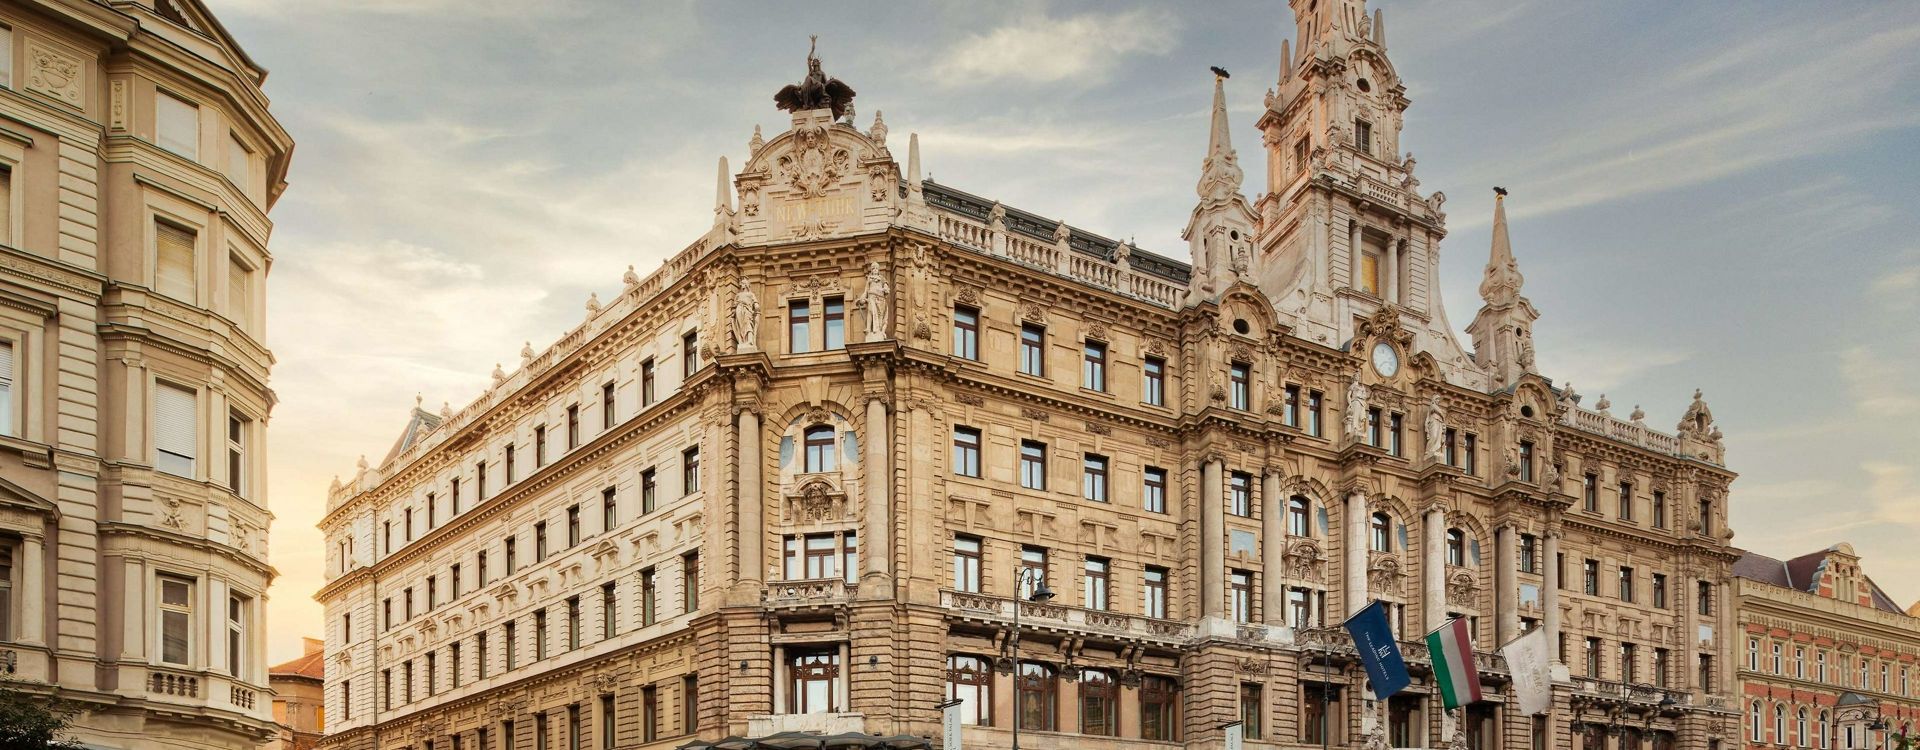 Anantara New York Palace Budapest Hotel-Location shots.jpg